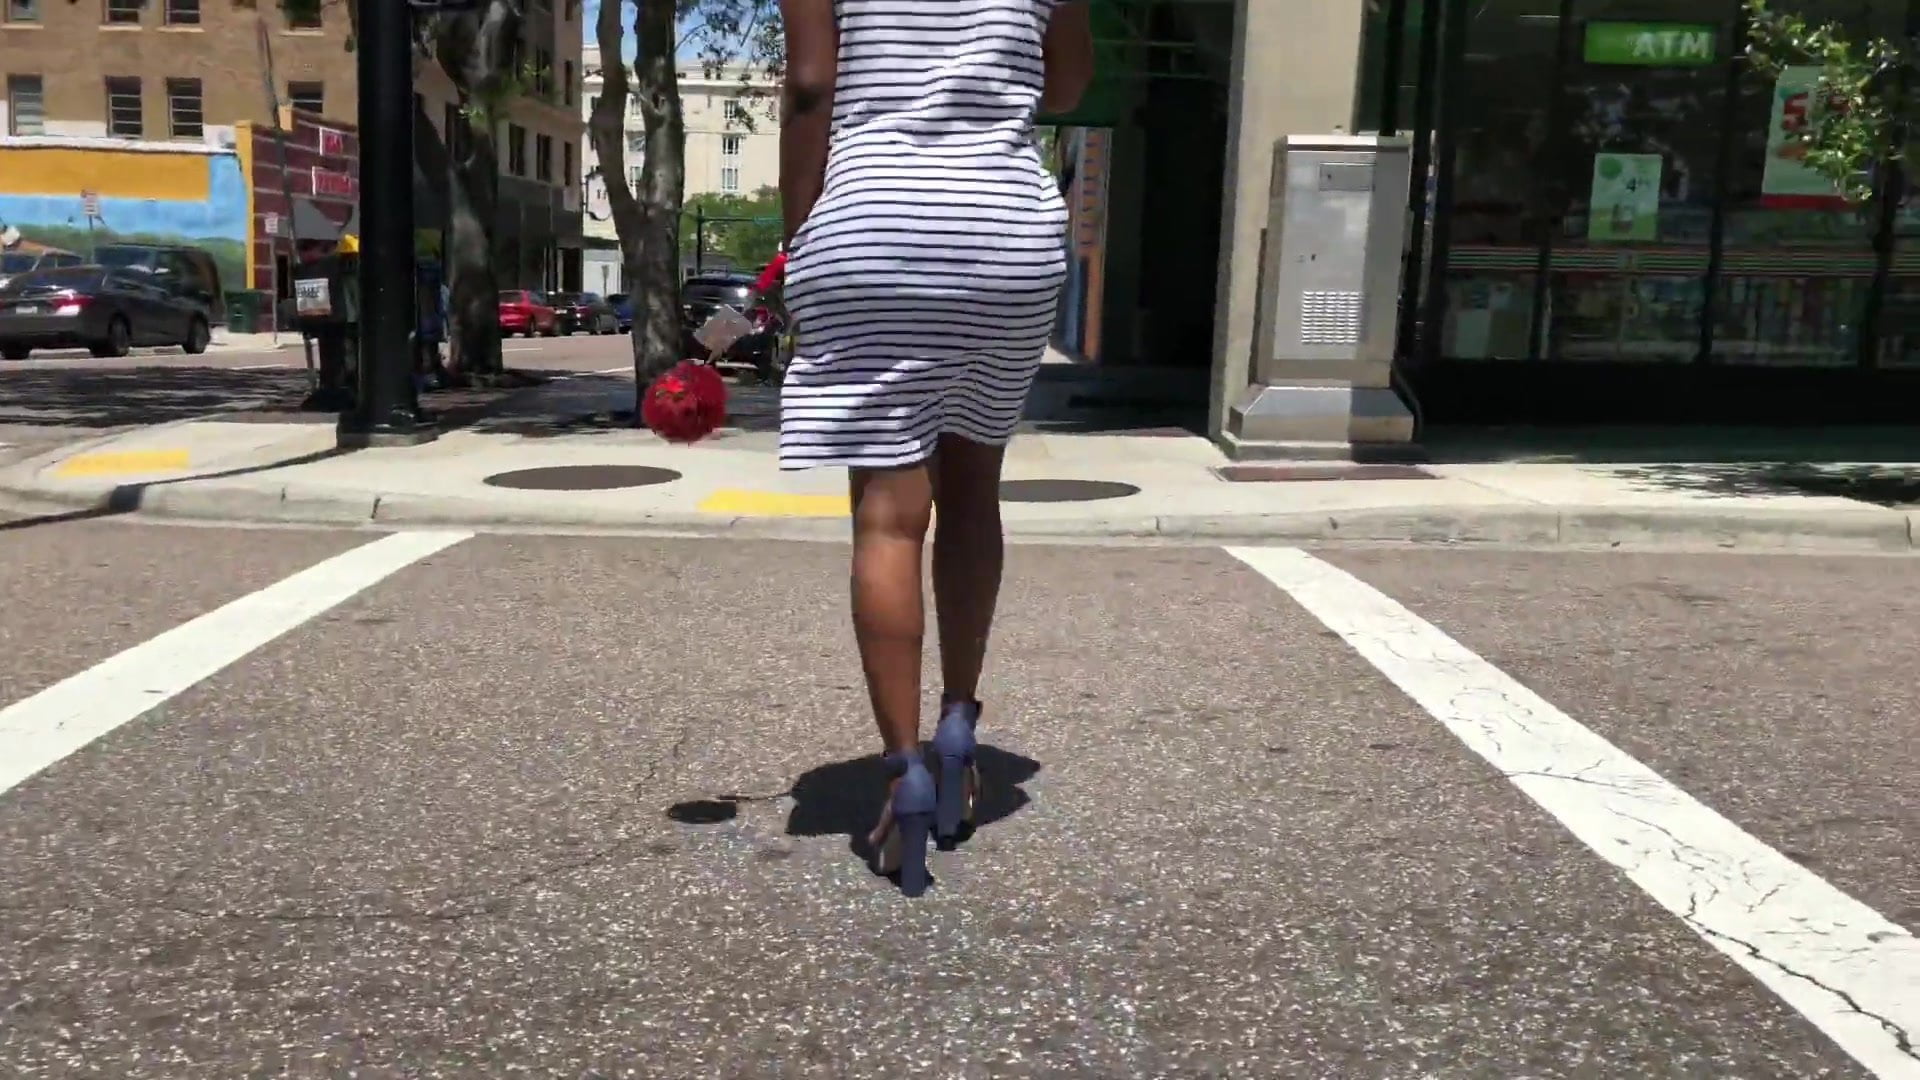 Ebony VPL in A Very Tight Striped Dress